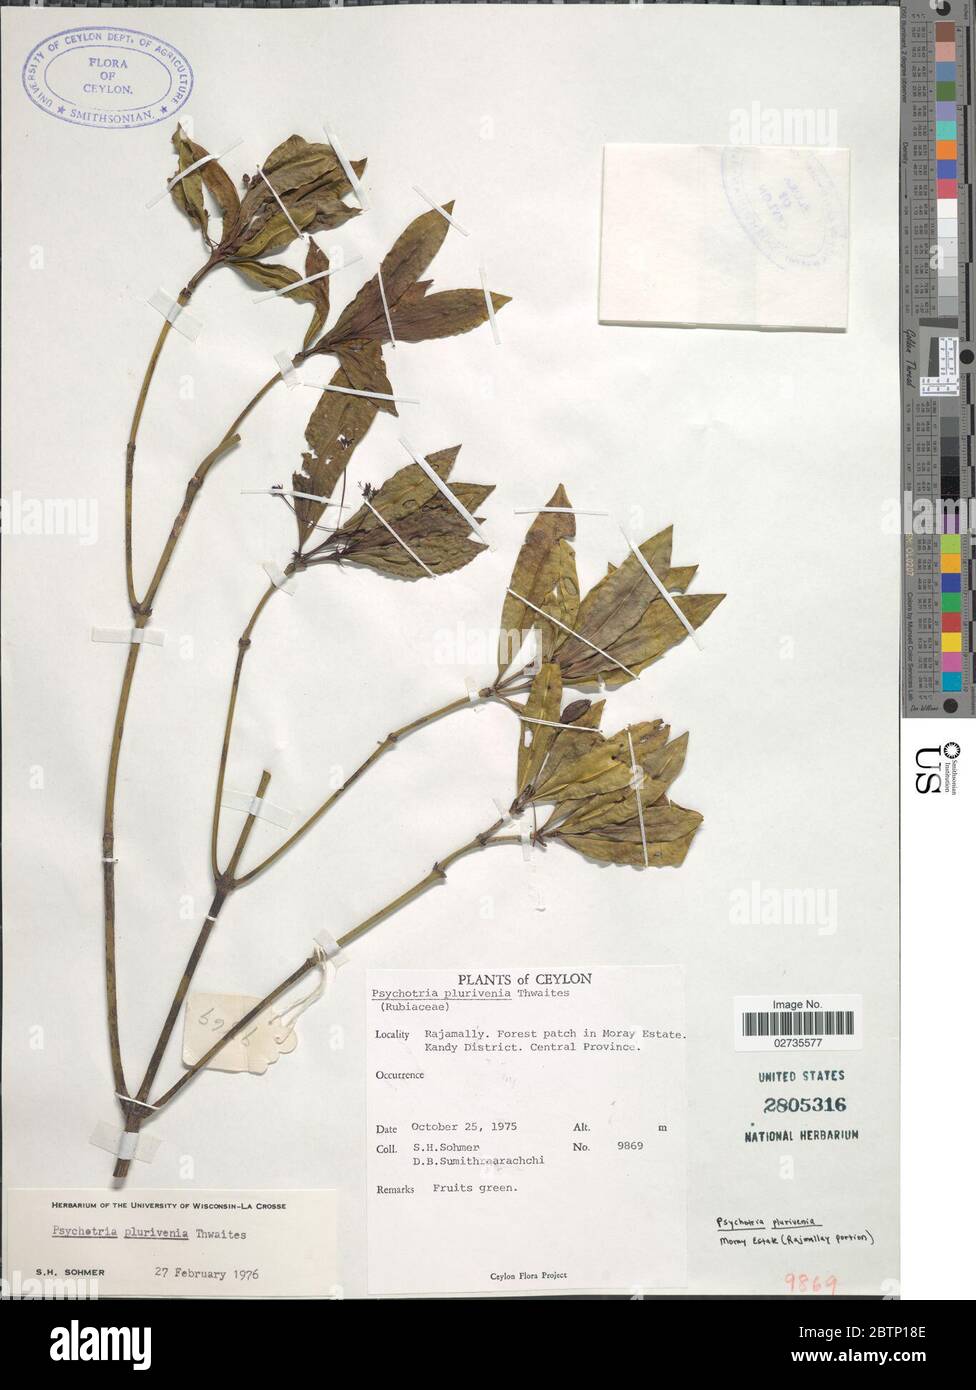 Psychotria plurivenia Thwaites. Stock Photo